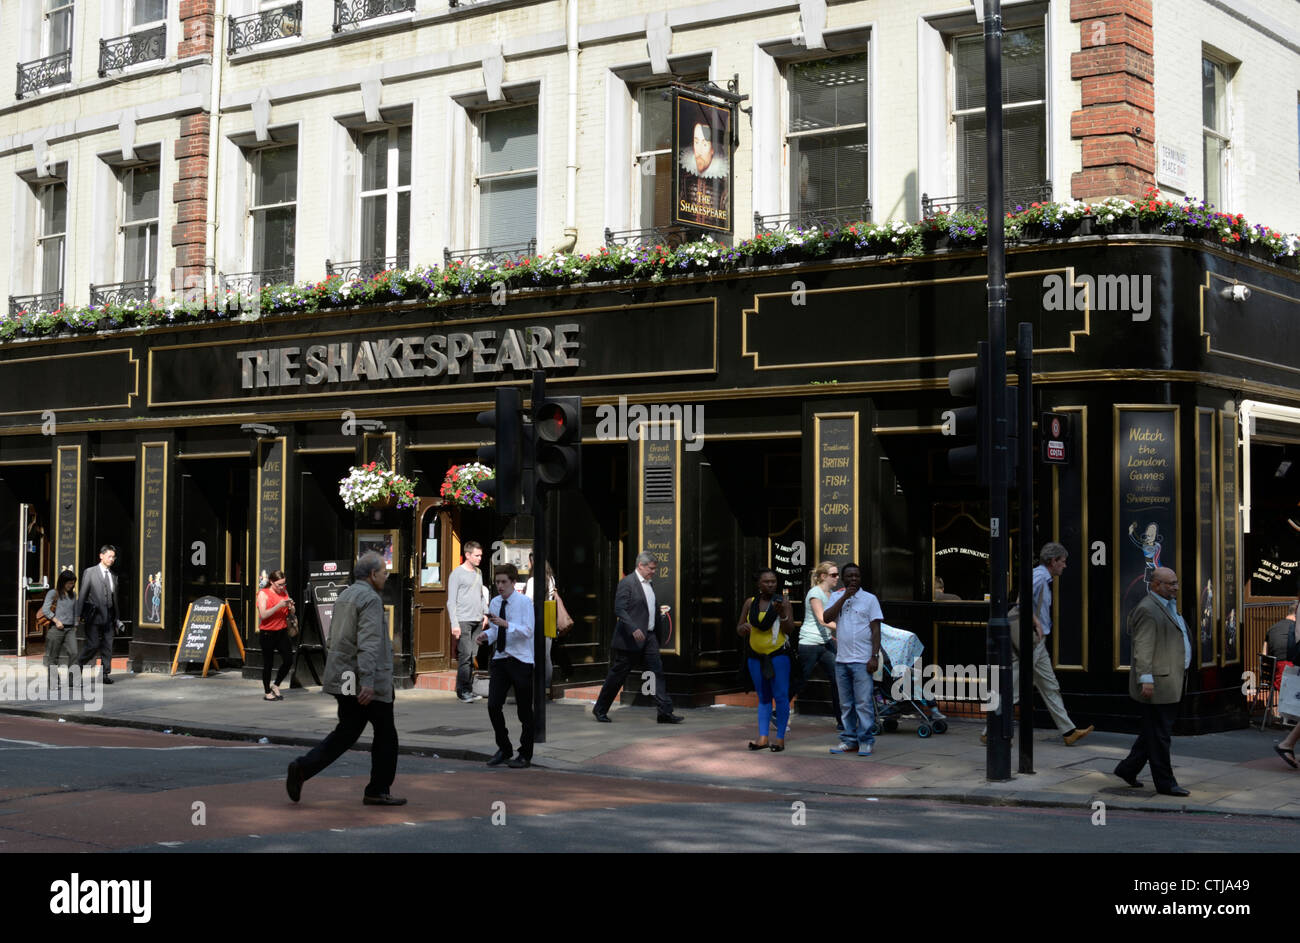 The Shakespeare pub near Victoria Station, London, UK Stock Photo